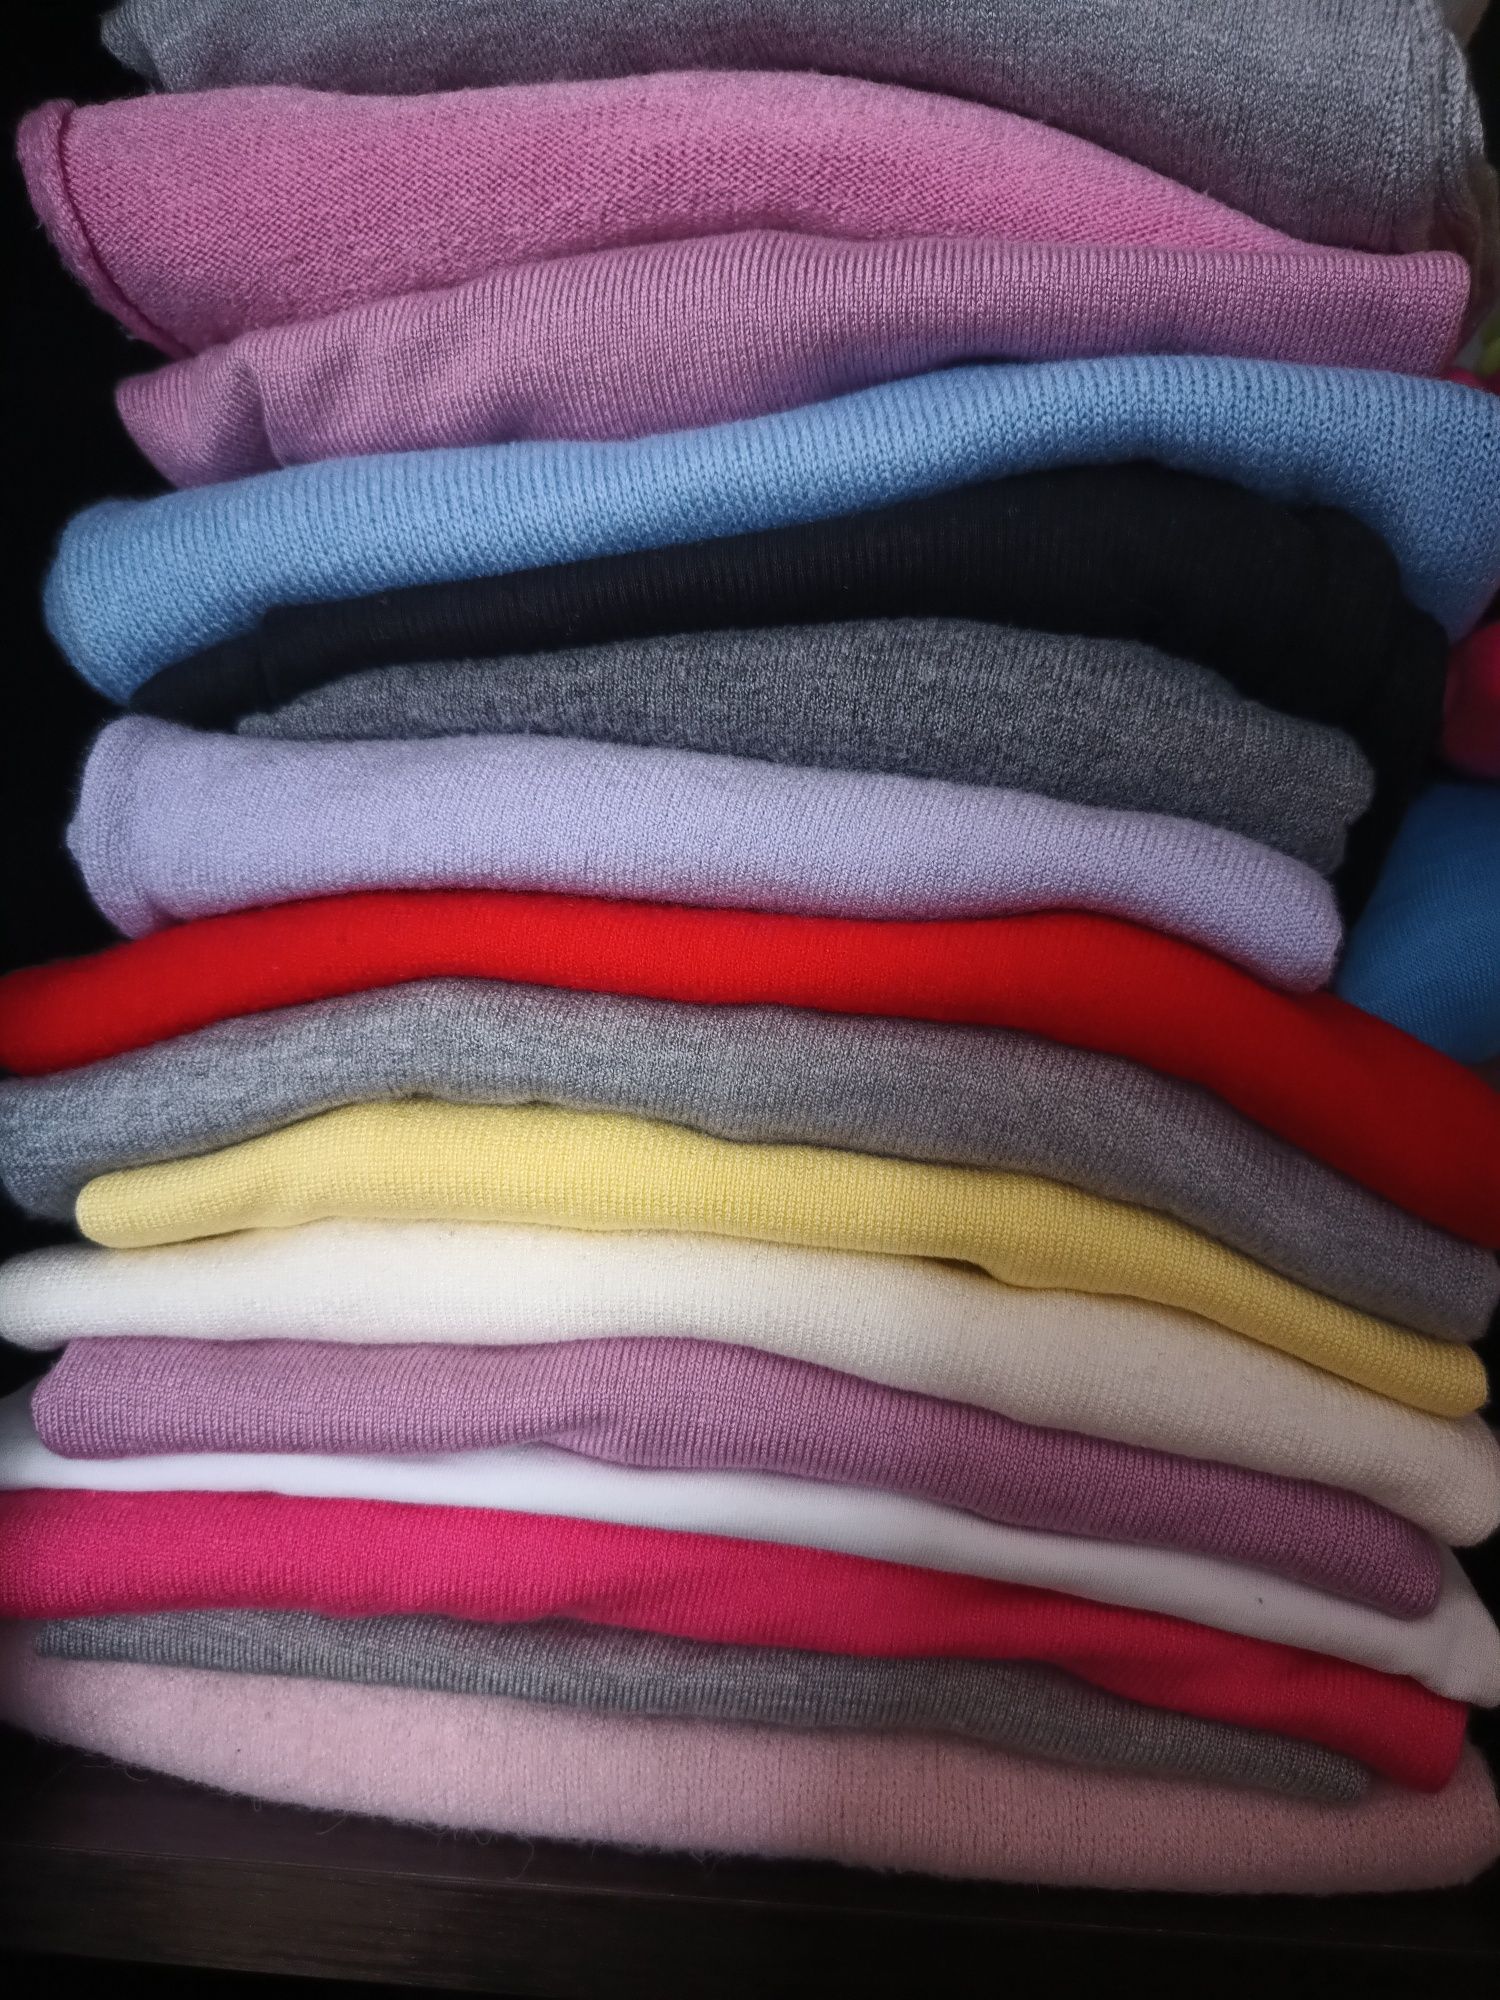 Sweterki różne kolory